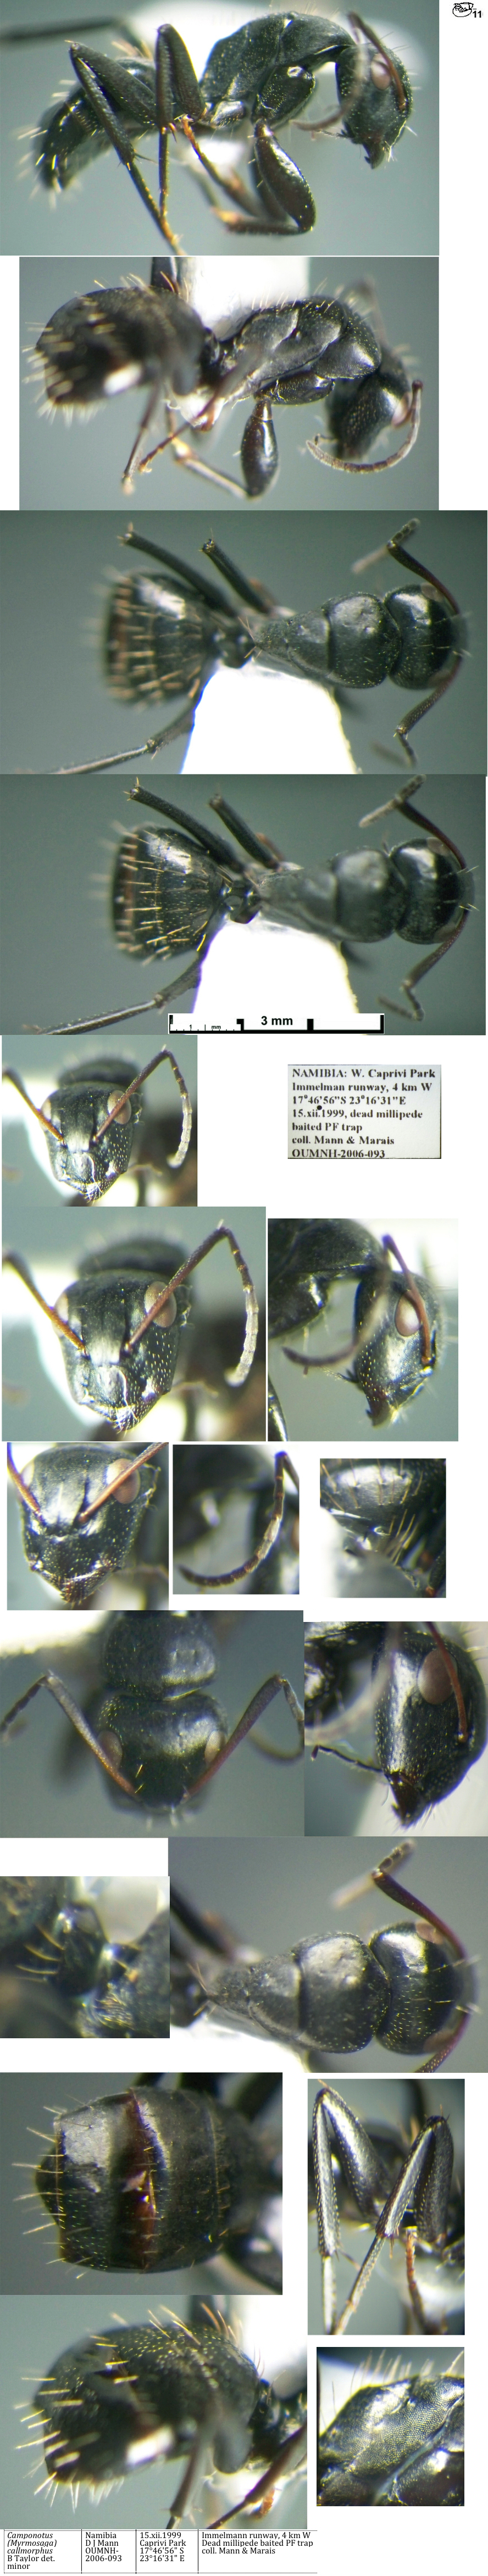 {Camponotus callmorphus minor}